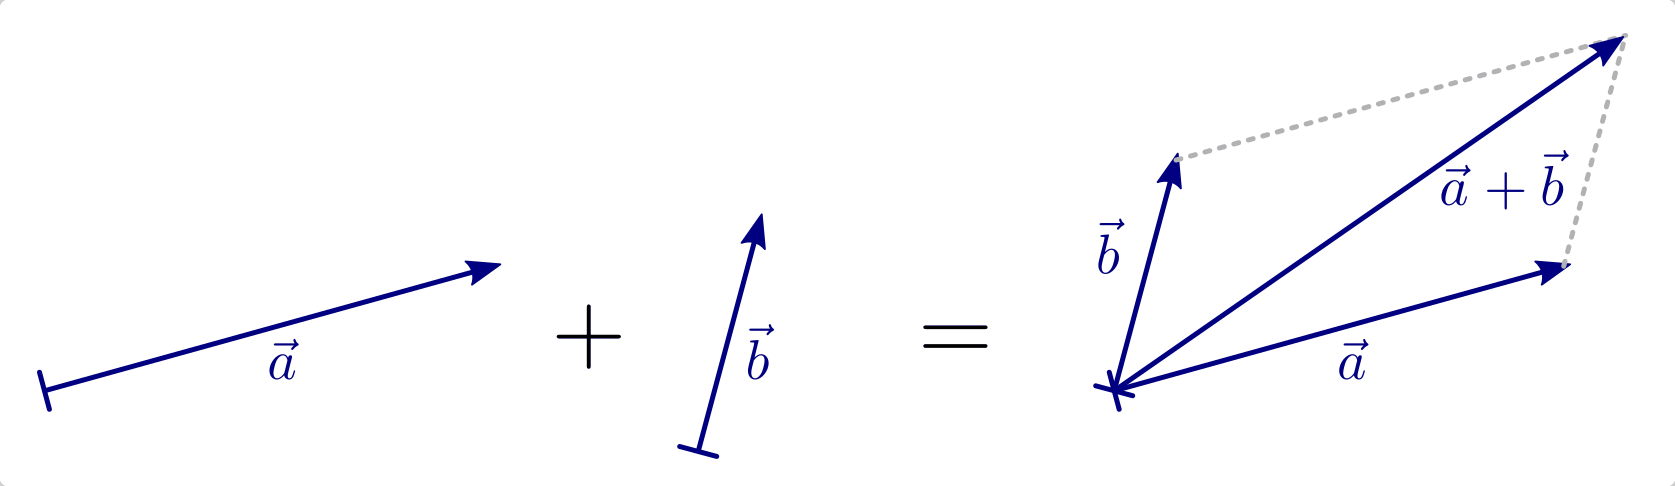 fig-vektor-addition